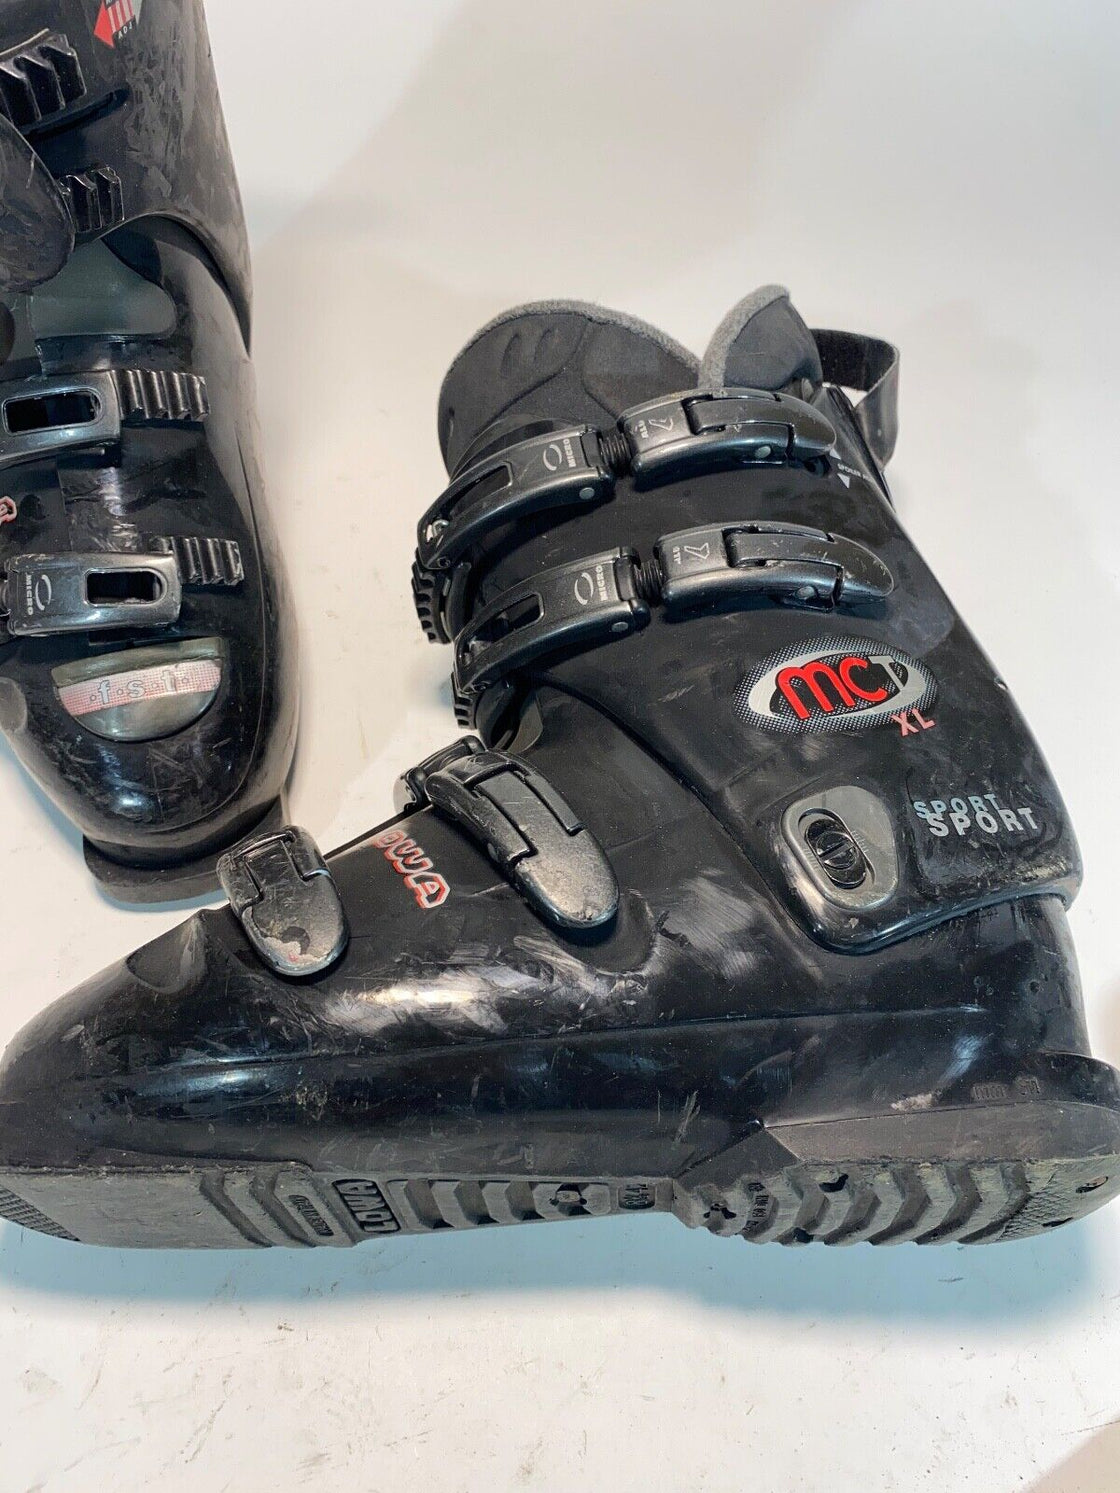 LOWA Alpine Ski Boots Downhill Boots Size EU42 Mondo 270 mm, Outer Sole 311 mm